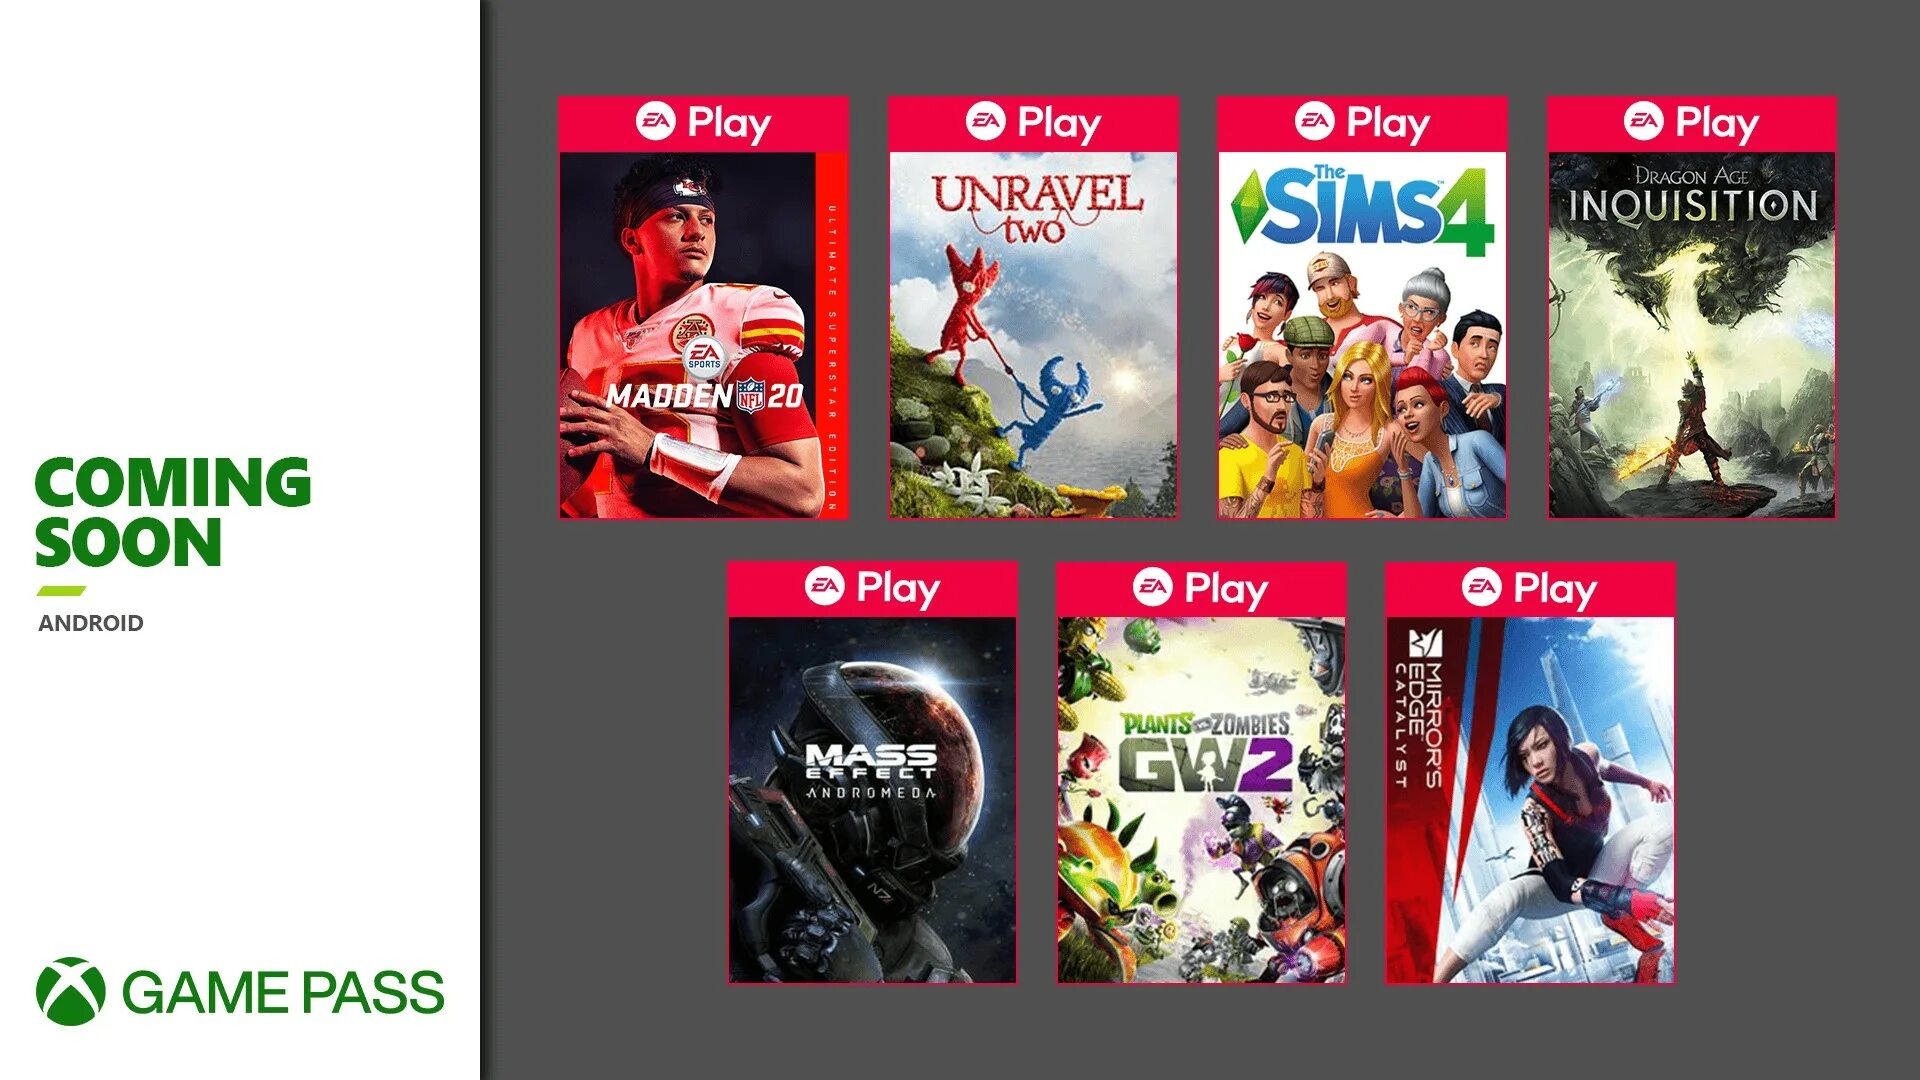 ГЕЙМПАСС Xbox игры. Game Pass Ultimate игры. Xbox game Pass Ultimate. Подписка ультимейт для Xbox. Подписка xbox game на пк